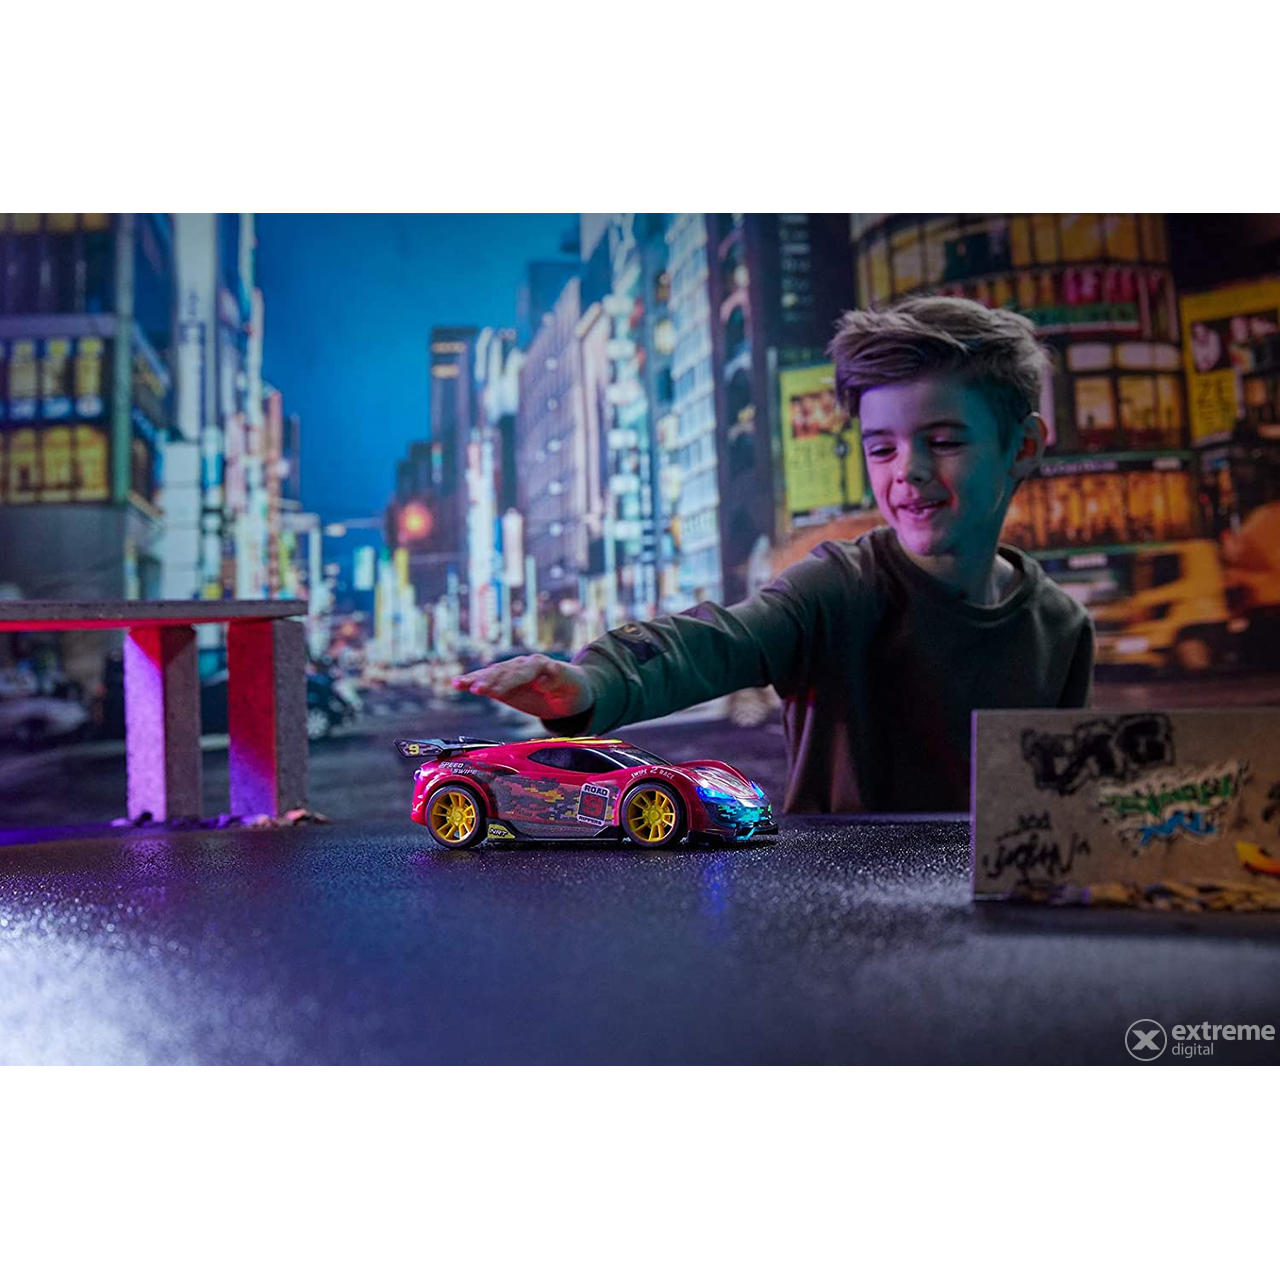 Nikko Road Rippers: Speed Swipe auto